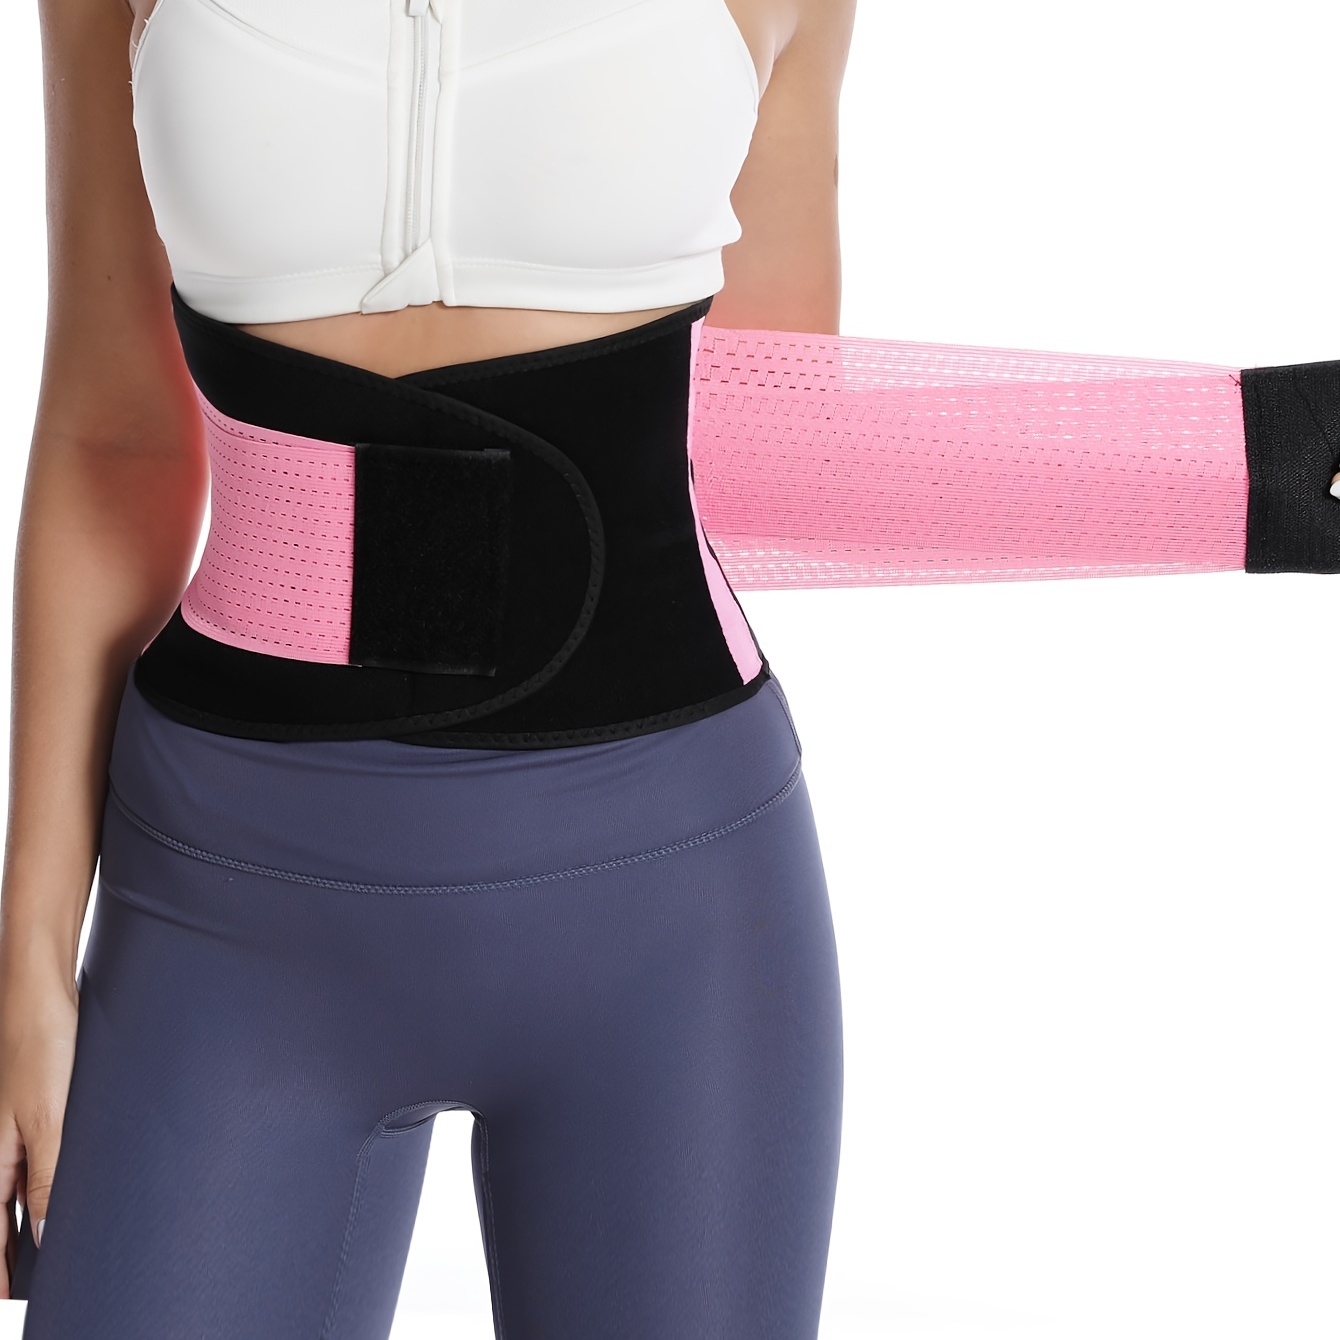 Plus Size Waist Trainer for Women Lower Belly Fat Workout Belt